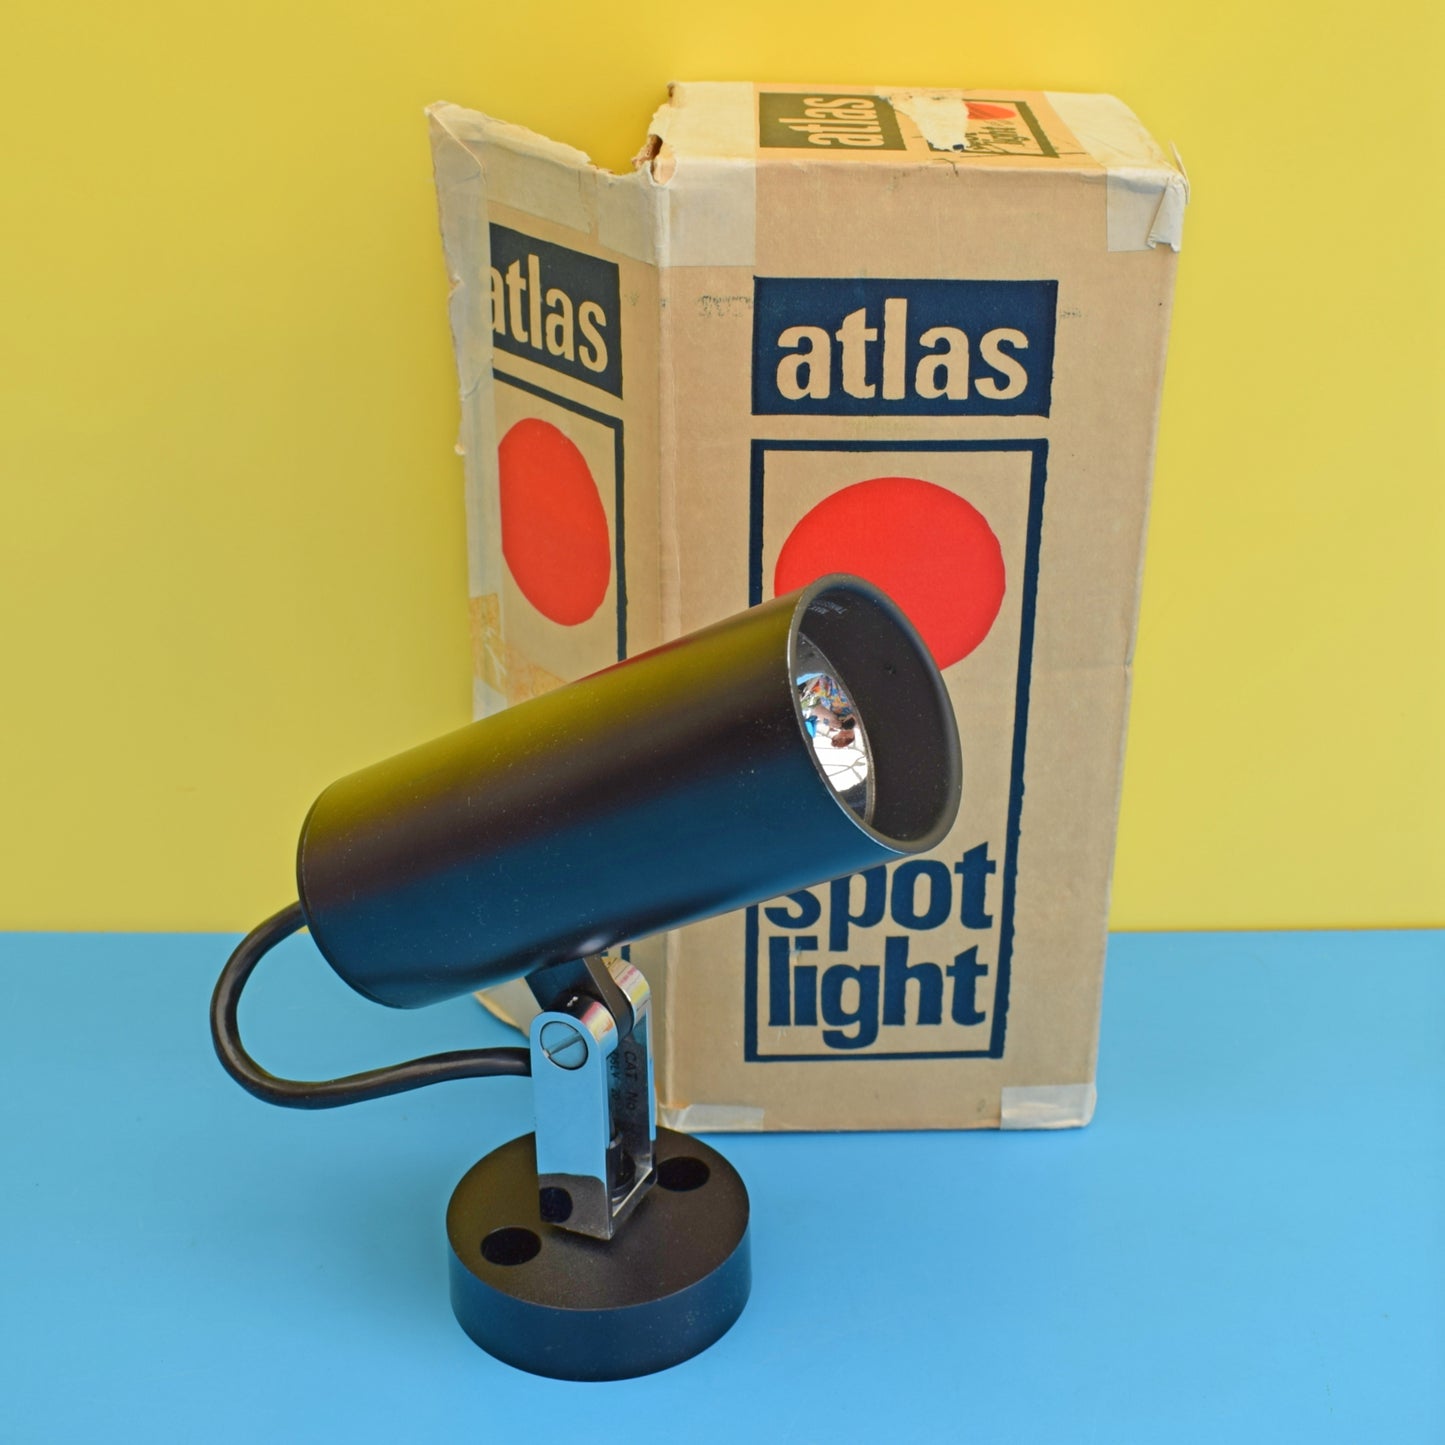 Vintage 1970s Thorn Atlas Spot Light - Boxed - Black